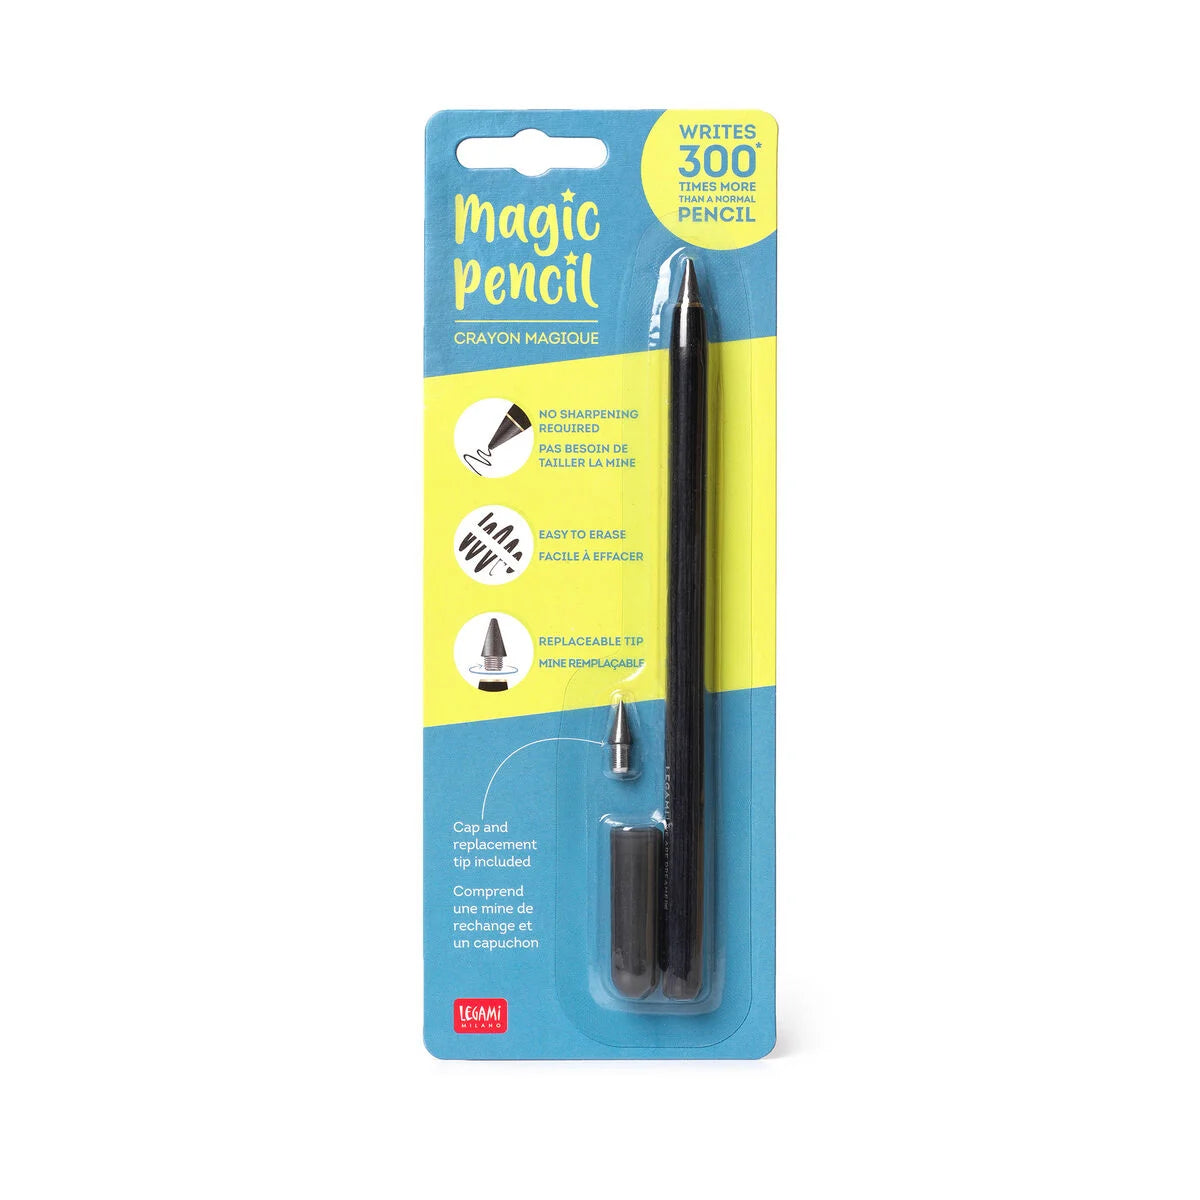 Magischer Bleistift - Magic Pencil